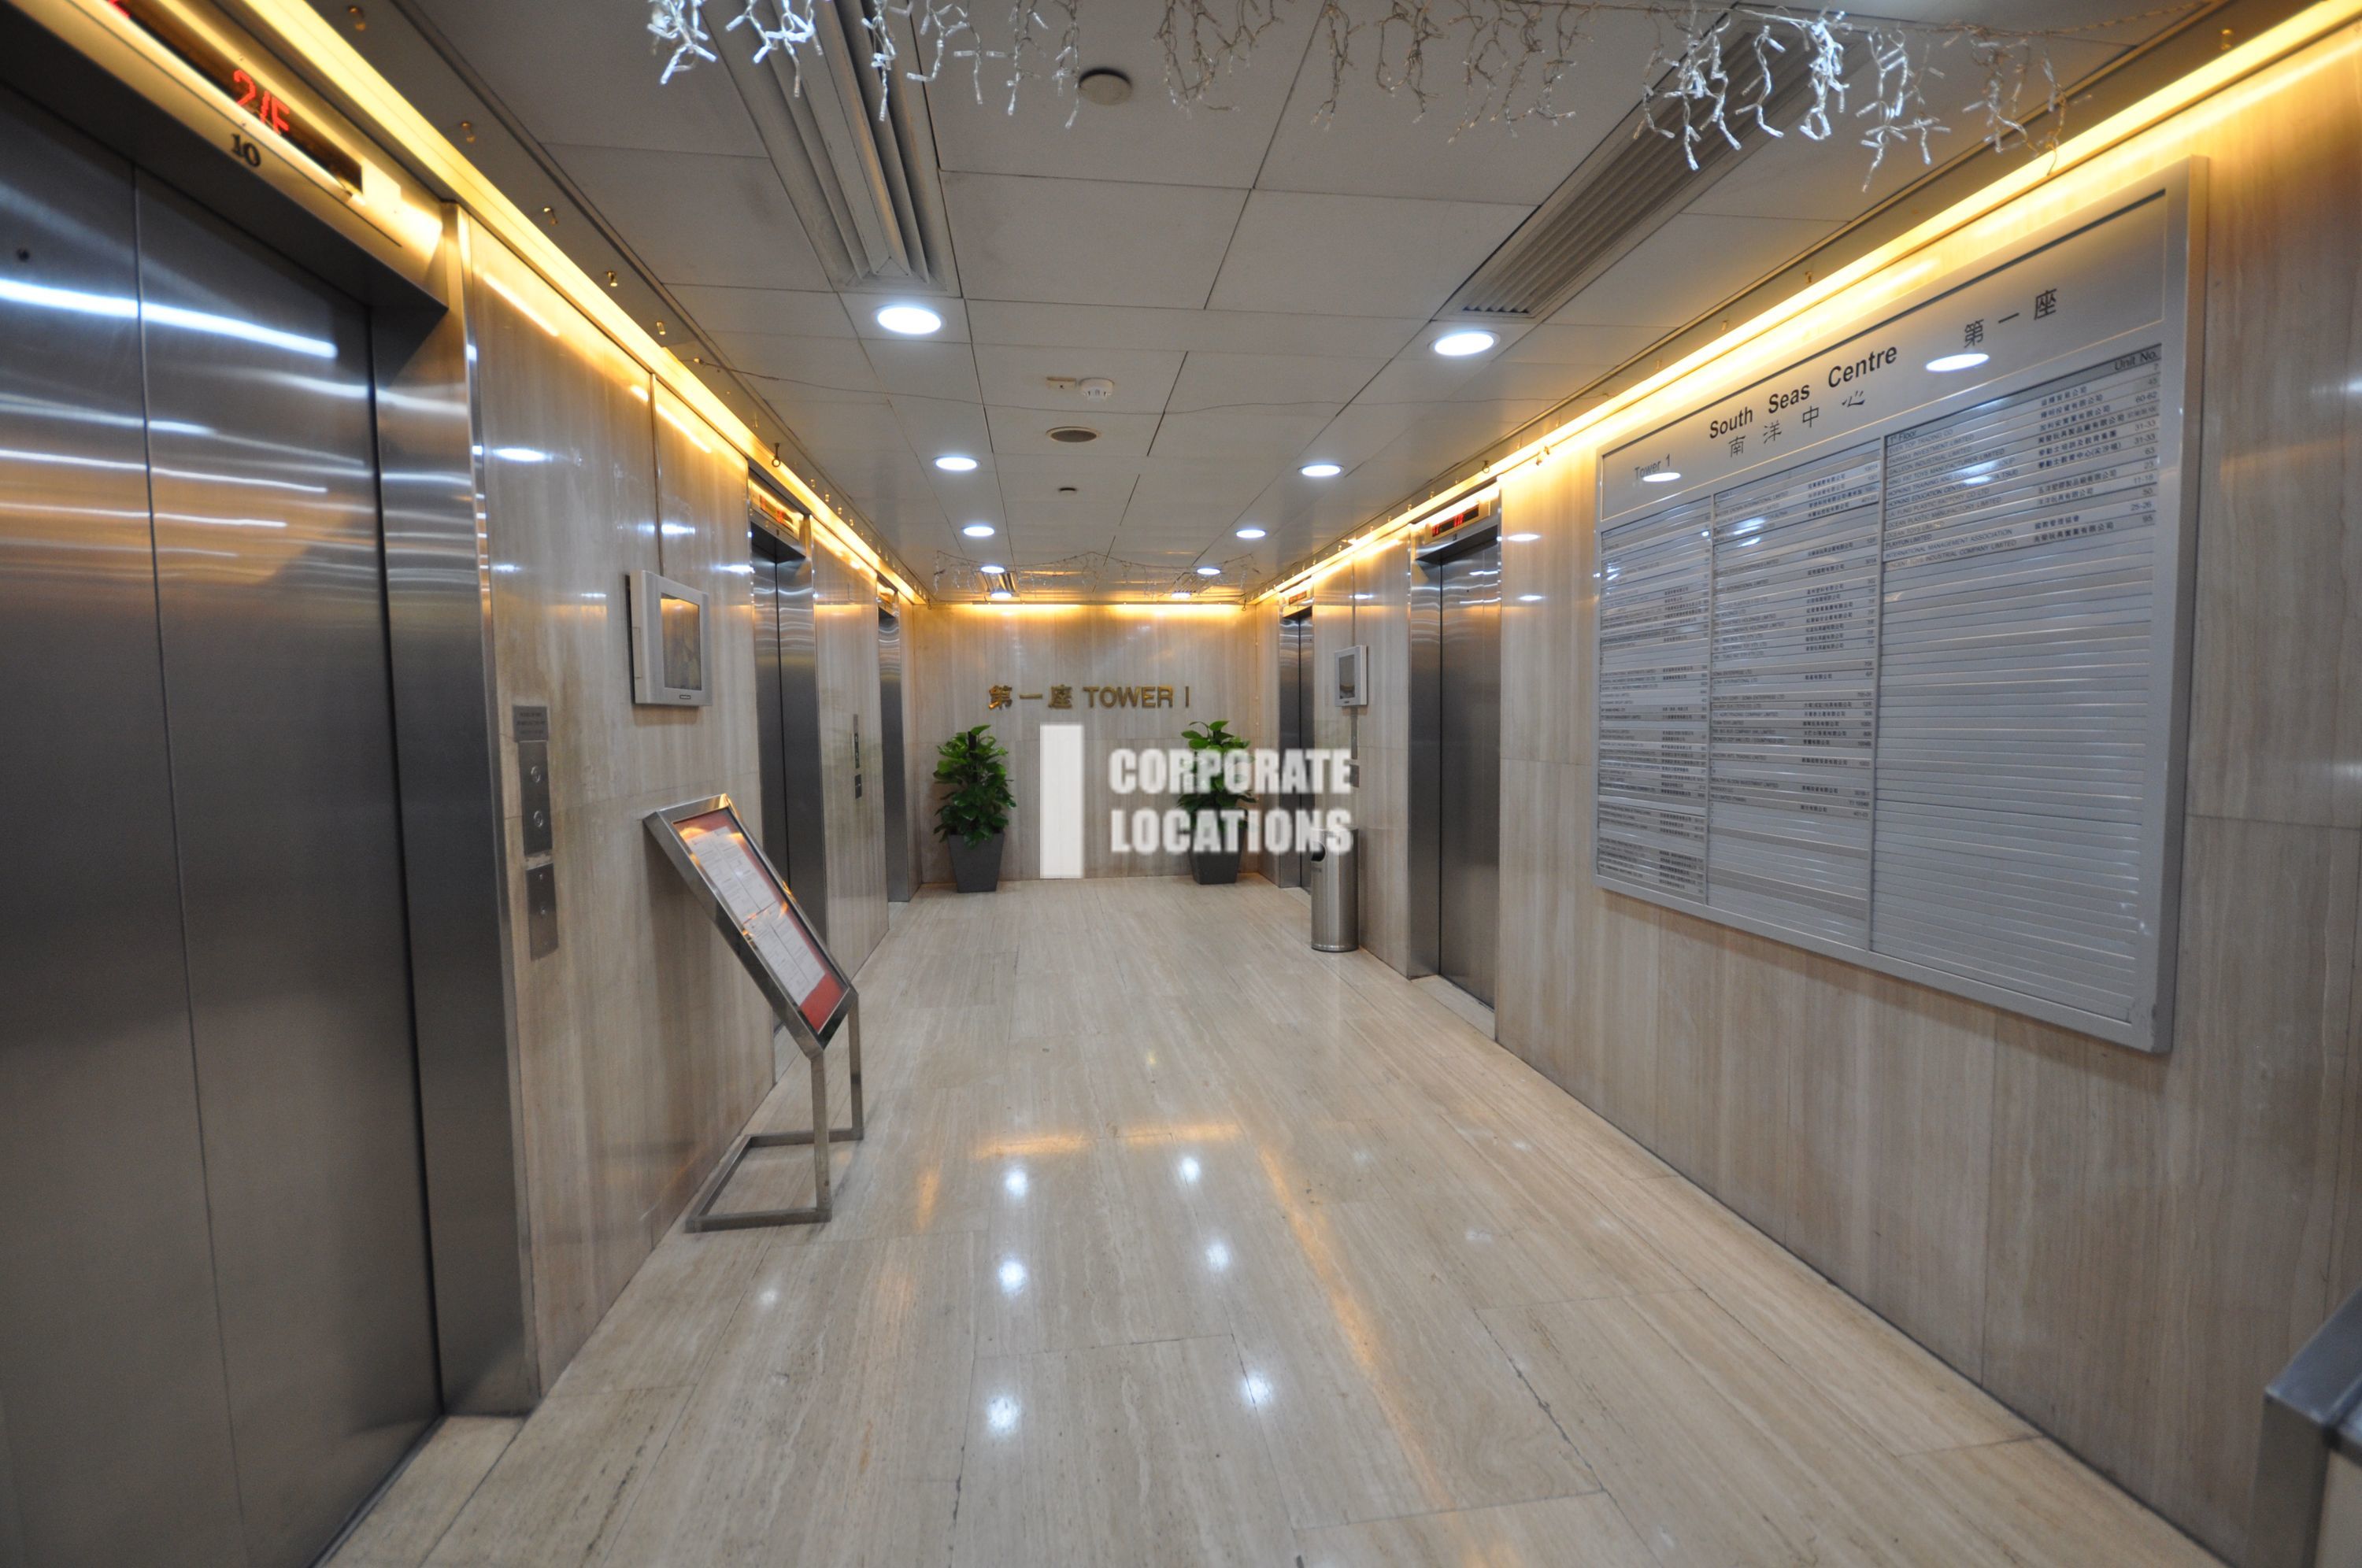 Office to rent in South Seas Centre Tower 1 - Tsim Sha Tsui / Jordan